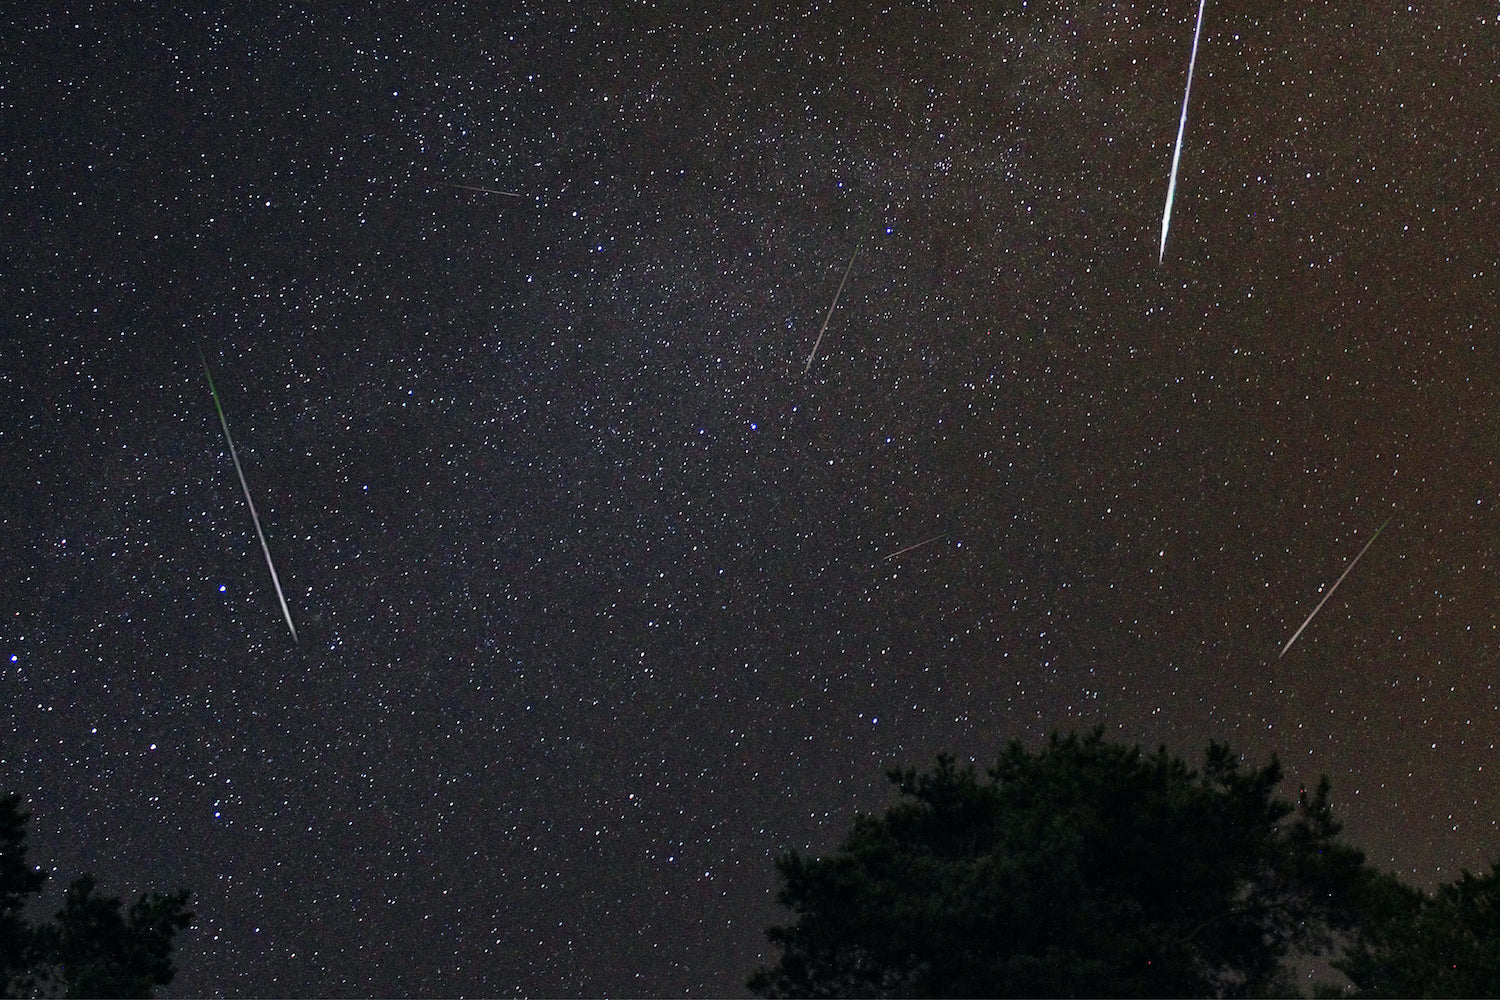 The Perseid Meteor Shower Peaks This Week. Here's How To See It...